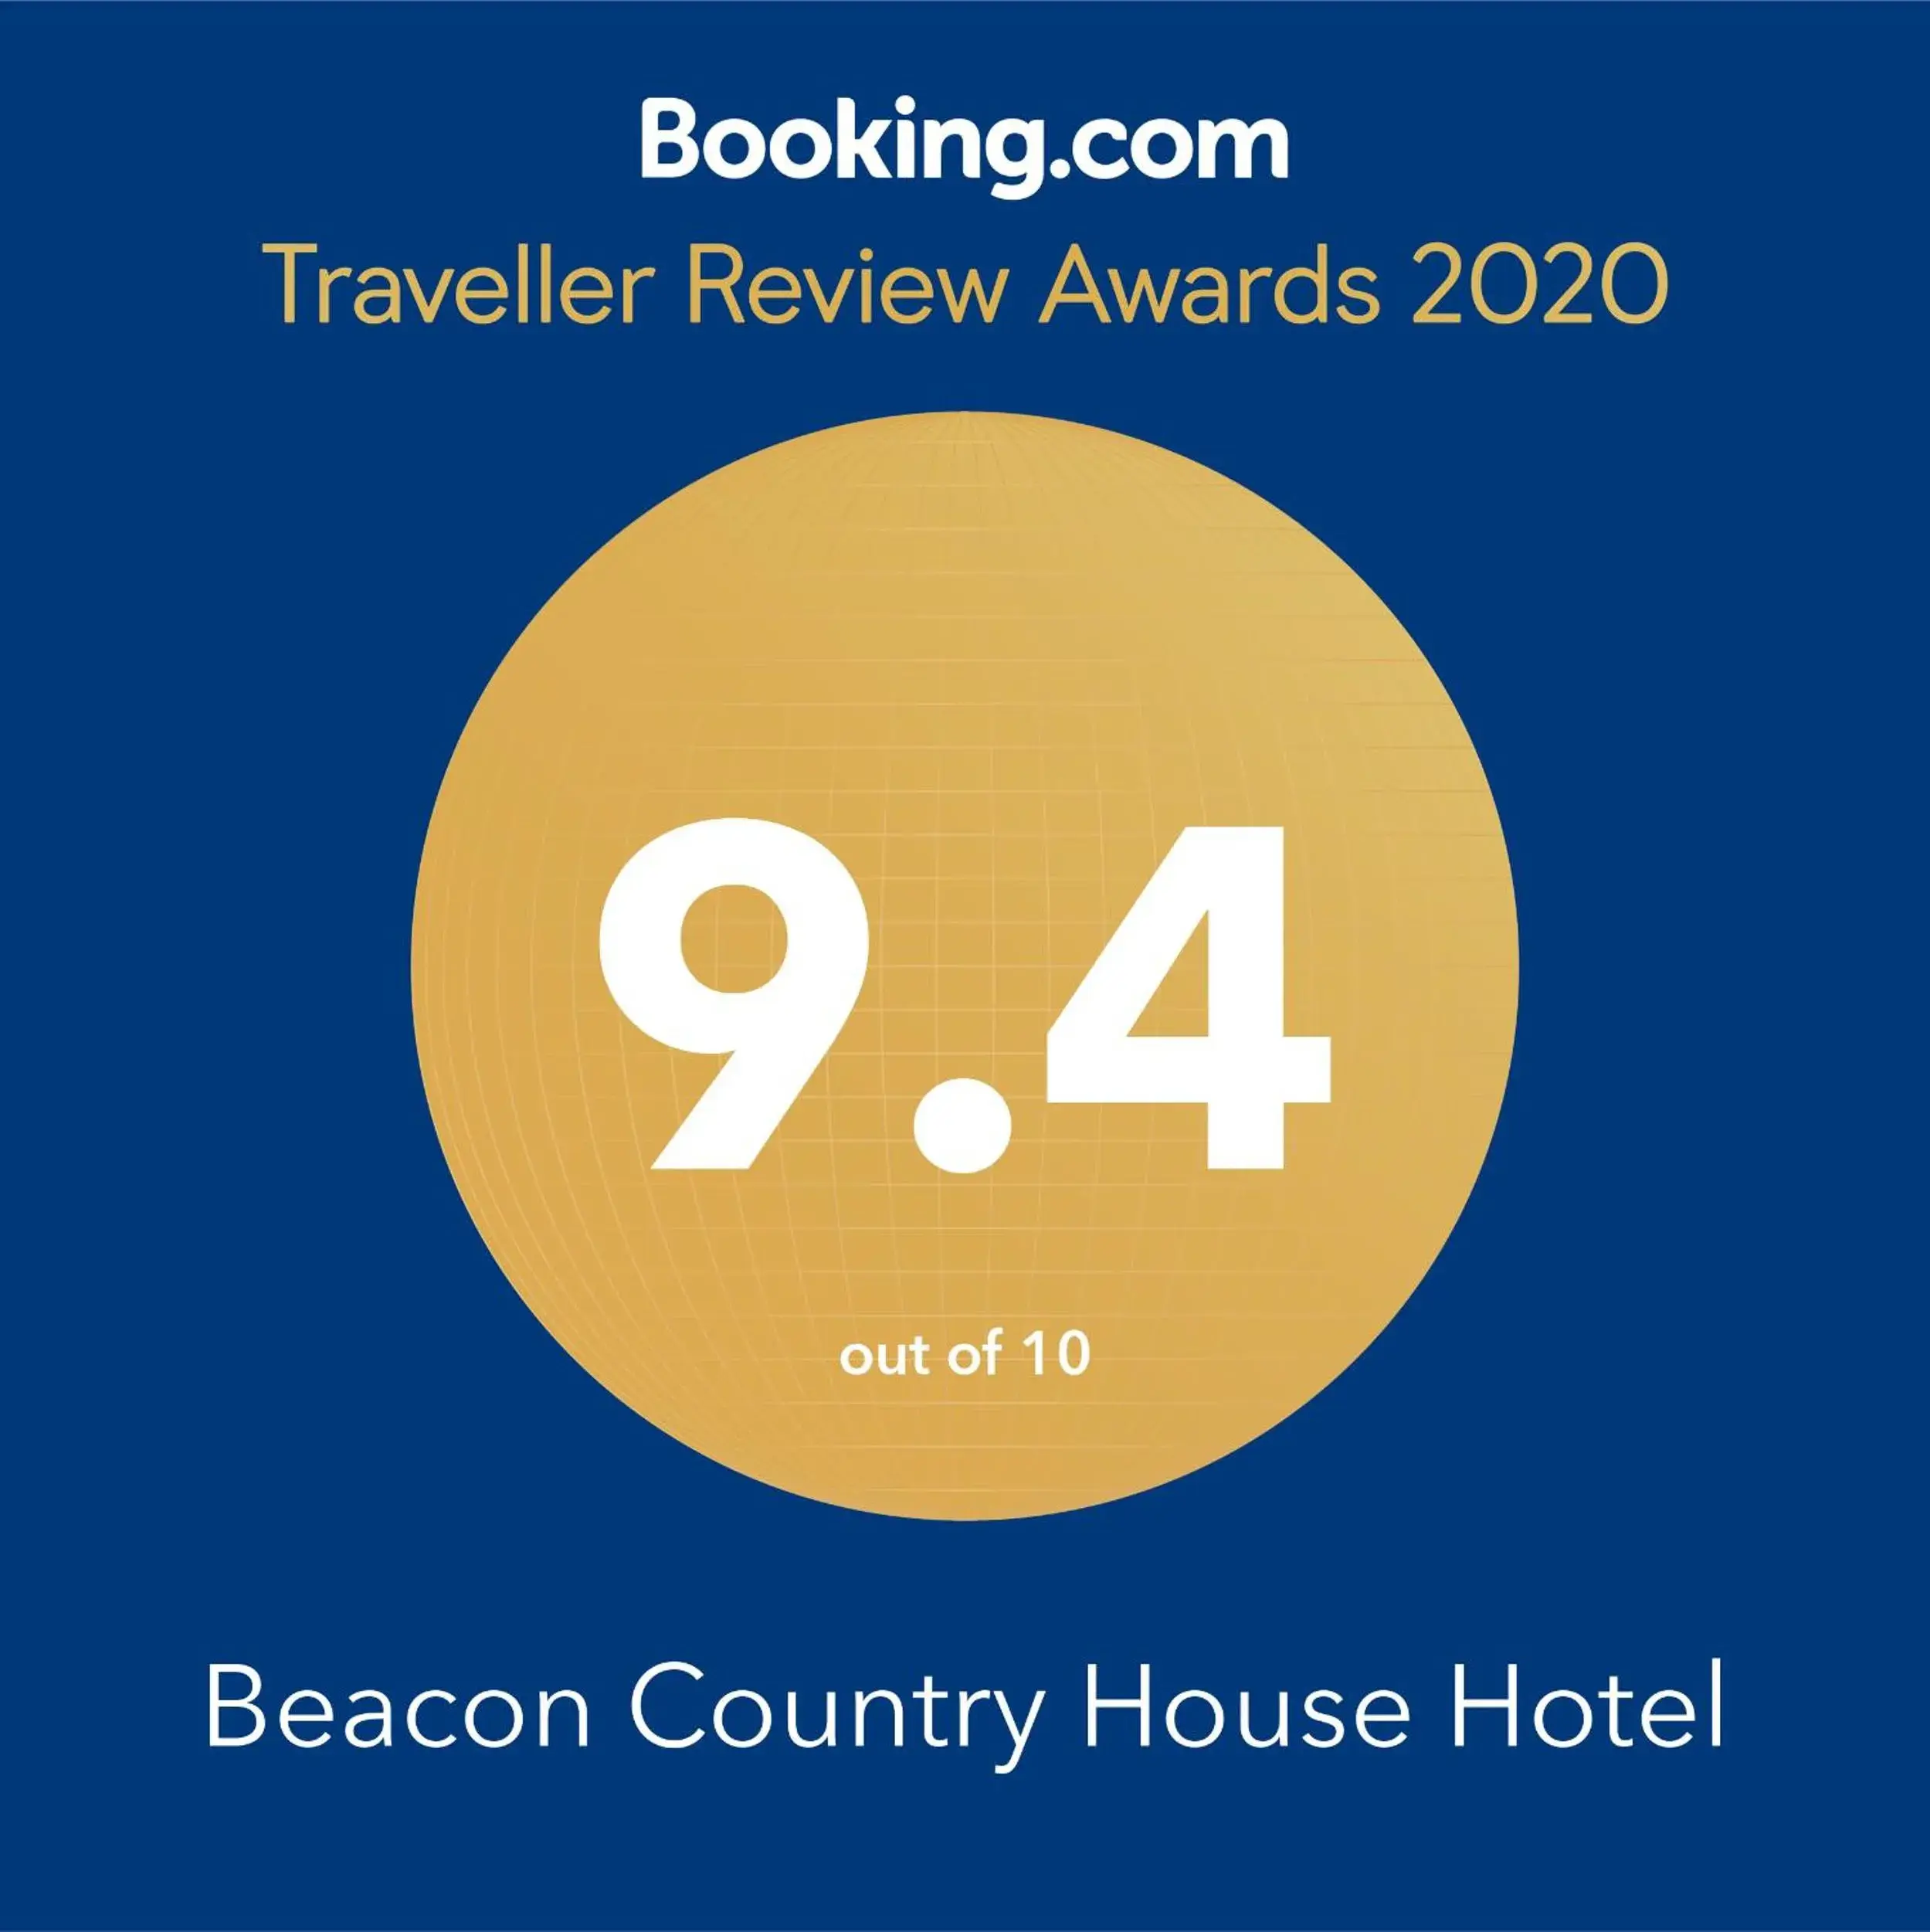 Certificate/Award in Beacon Country House Hotel & Luxury Shepherd Huts